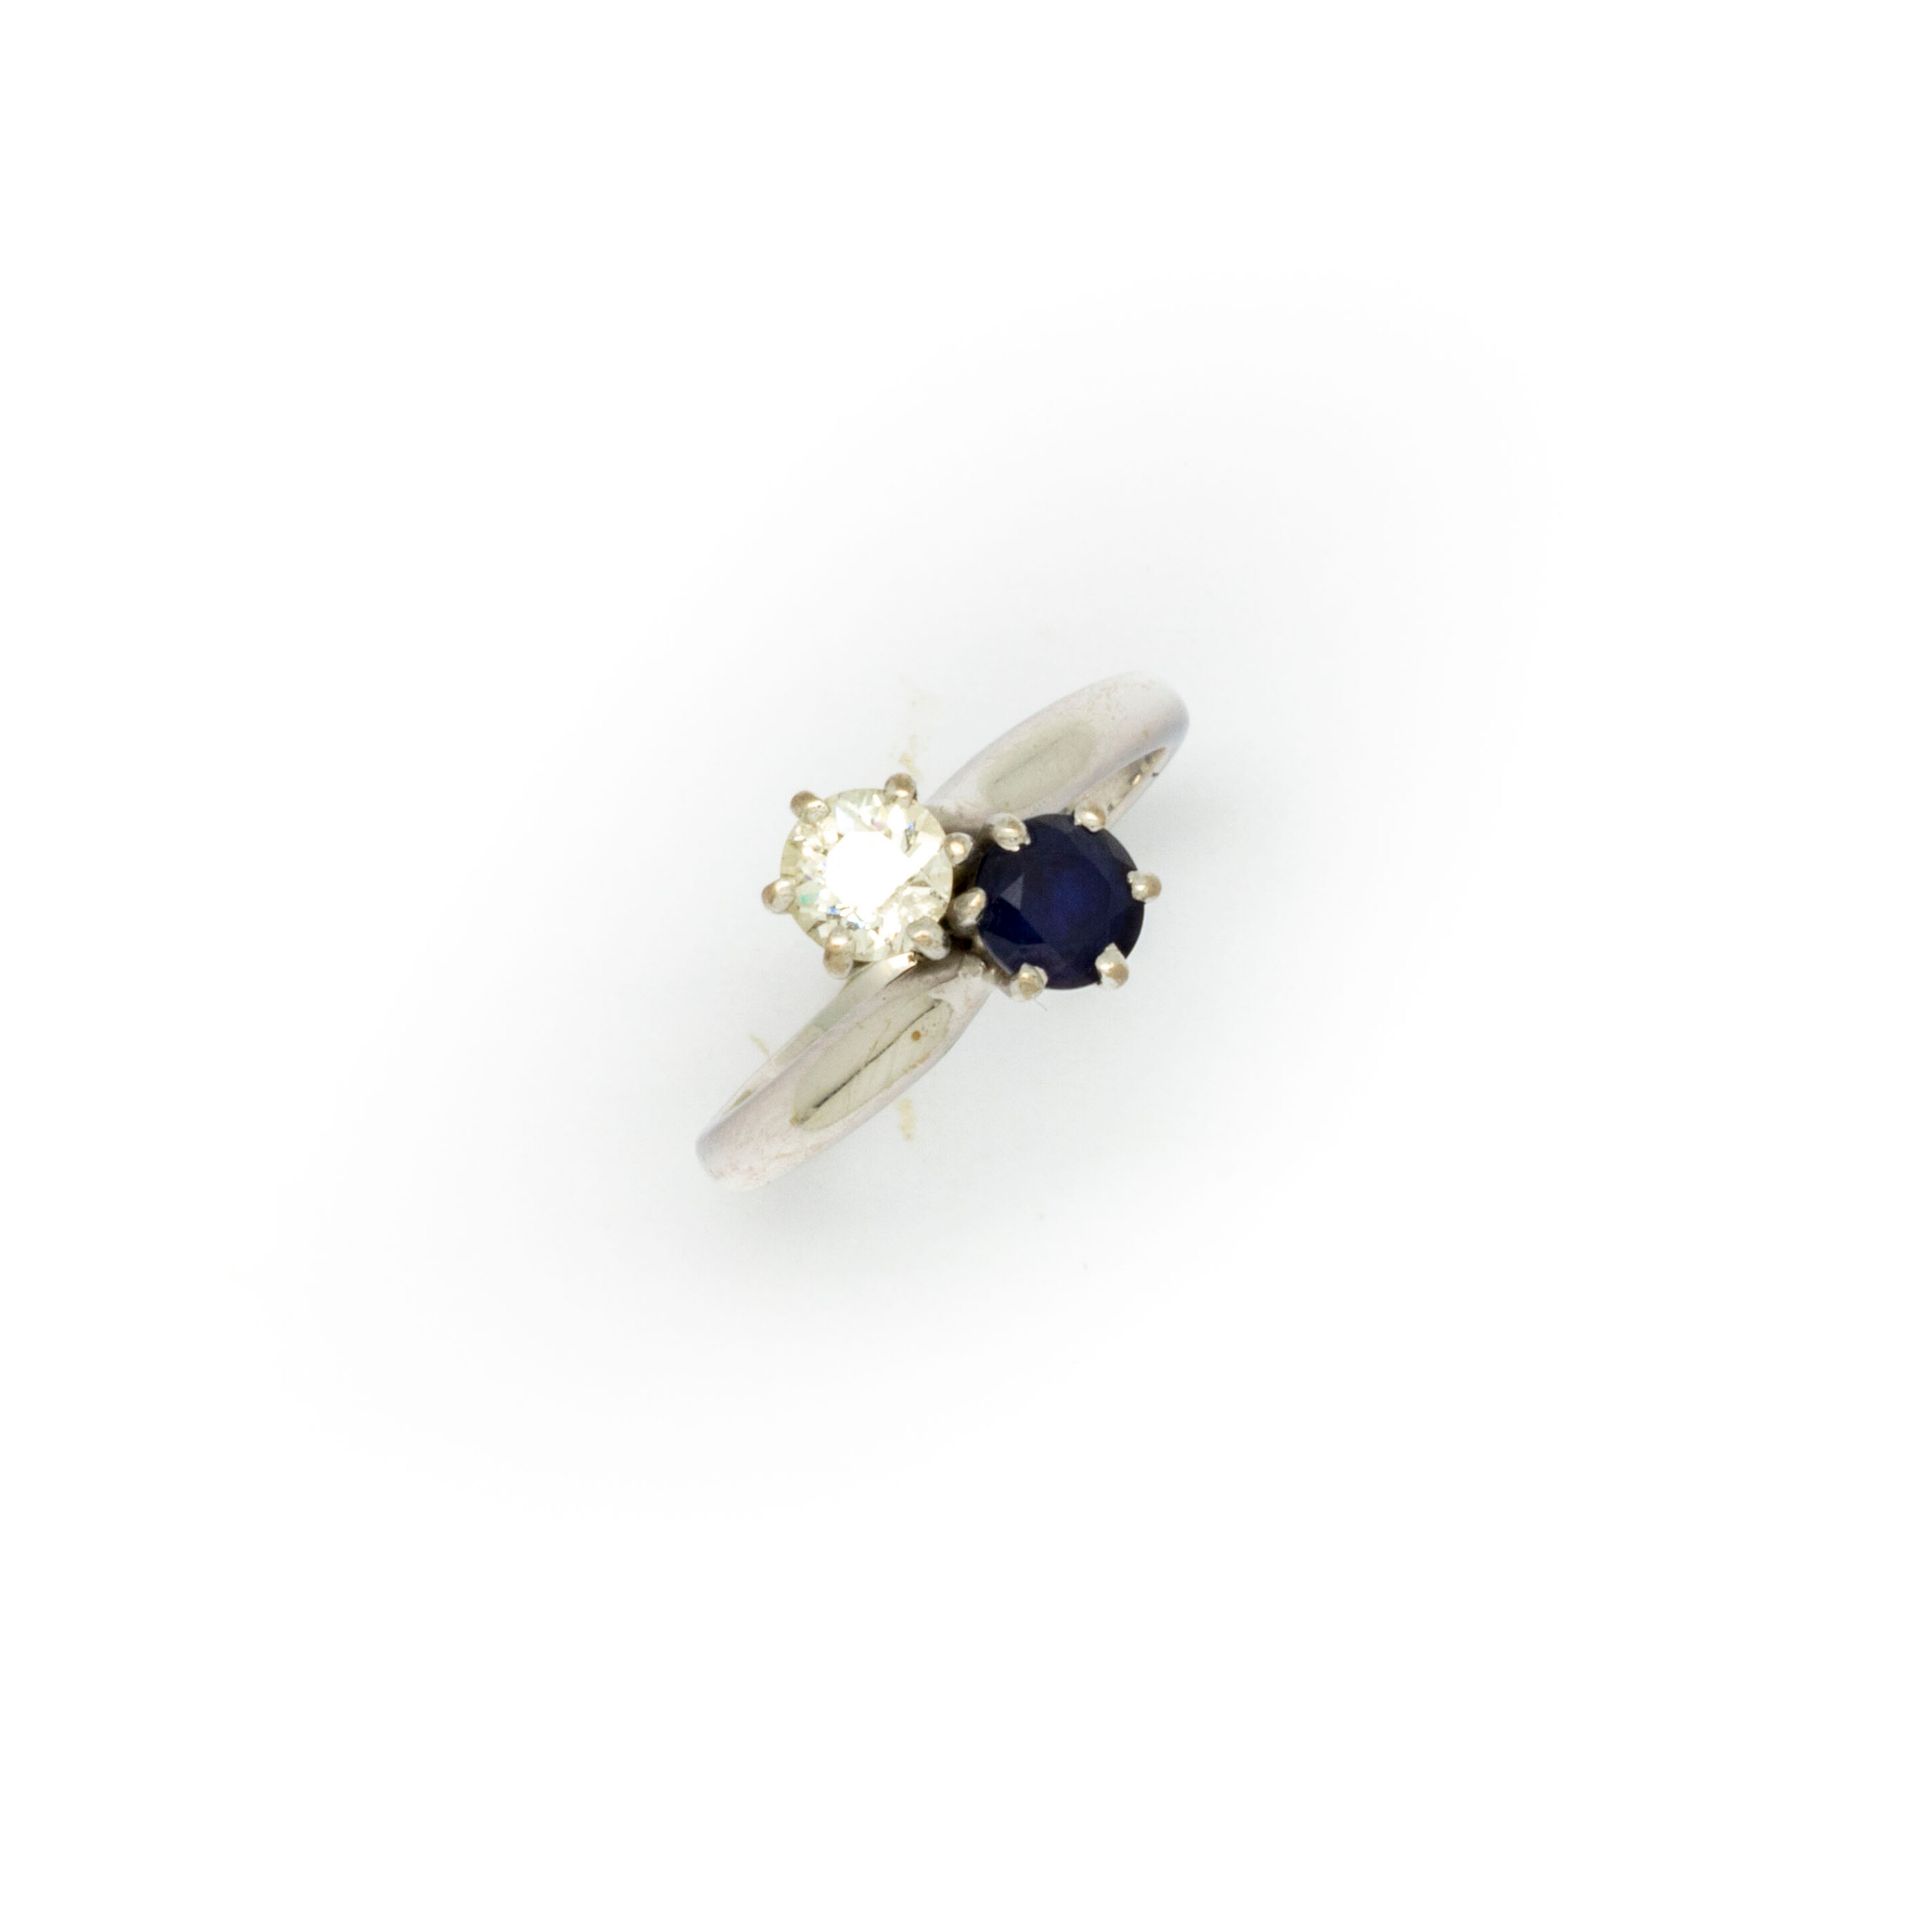 Null 白金戒指，上面有一个你和我，包括一颗约0.25克拉的钻石和一颗蓝宝石

毛重：3.6克。